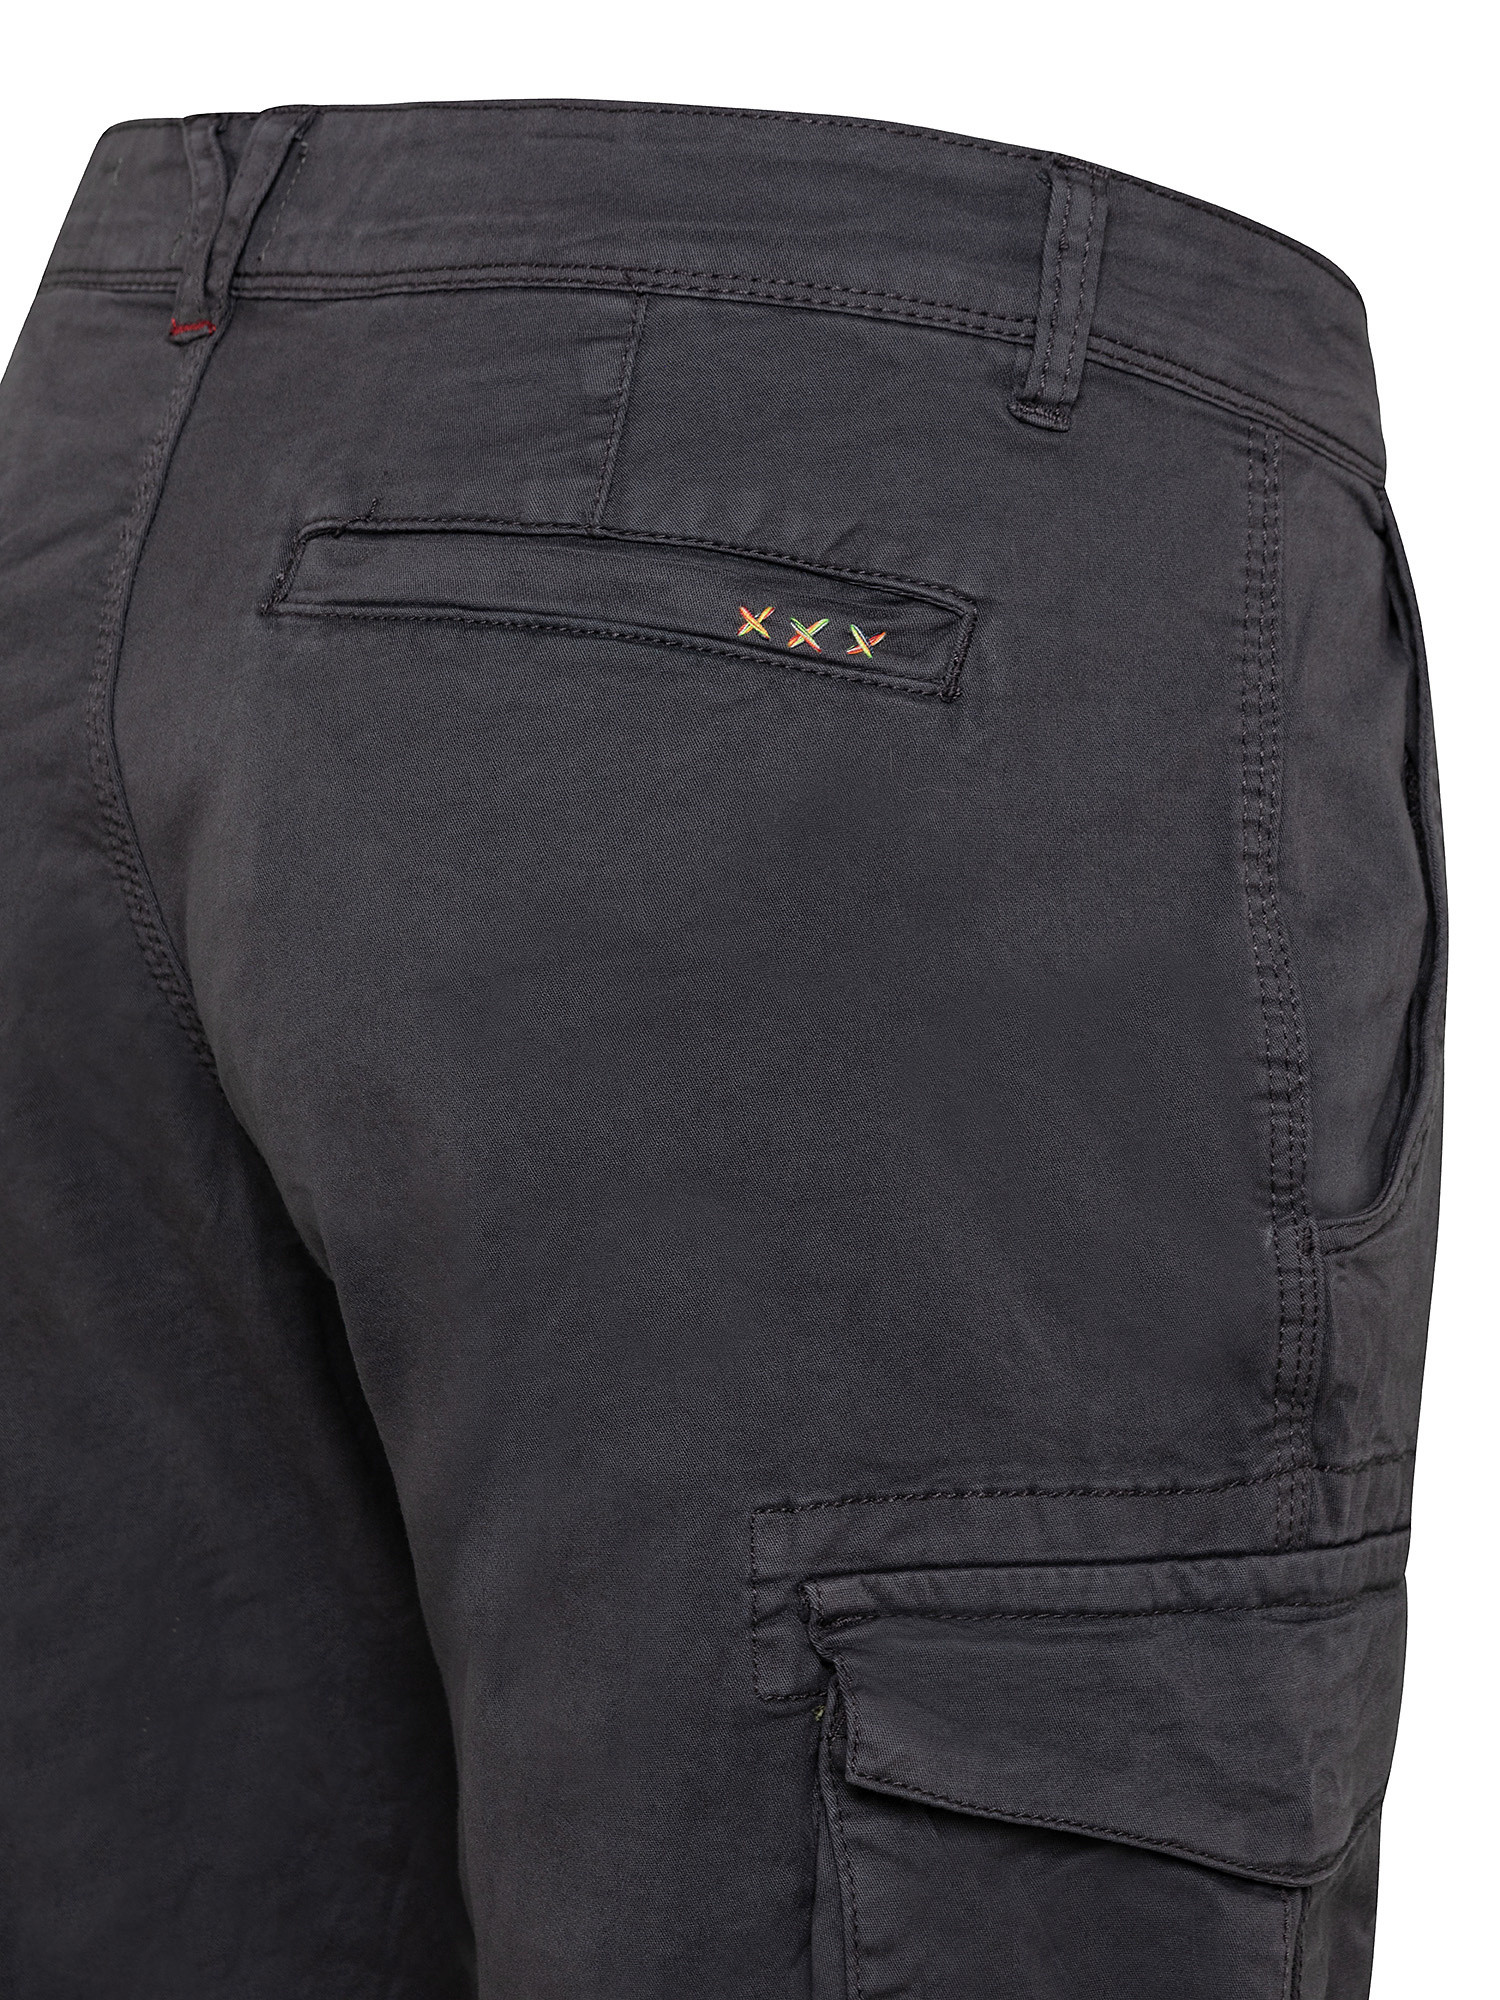 Pantalone cargo cotone stretch, Grigio, large image number 2